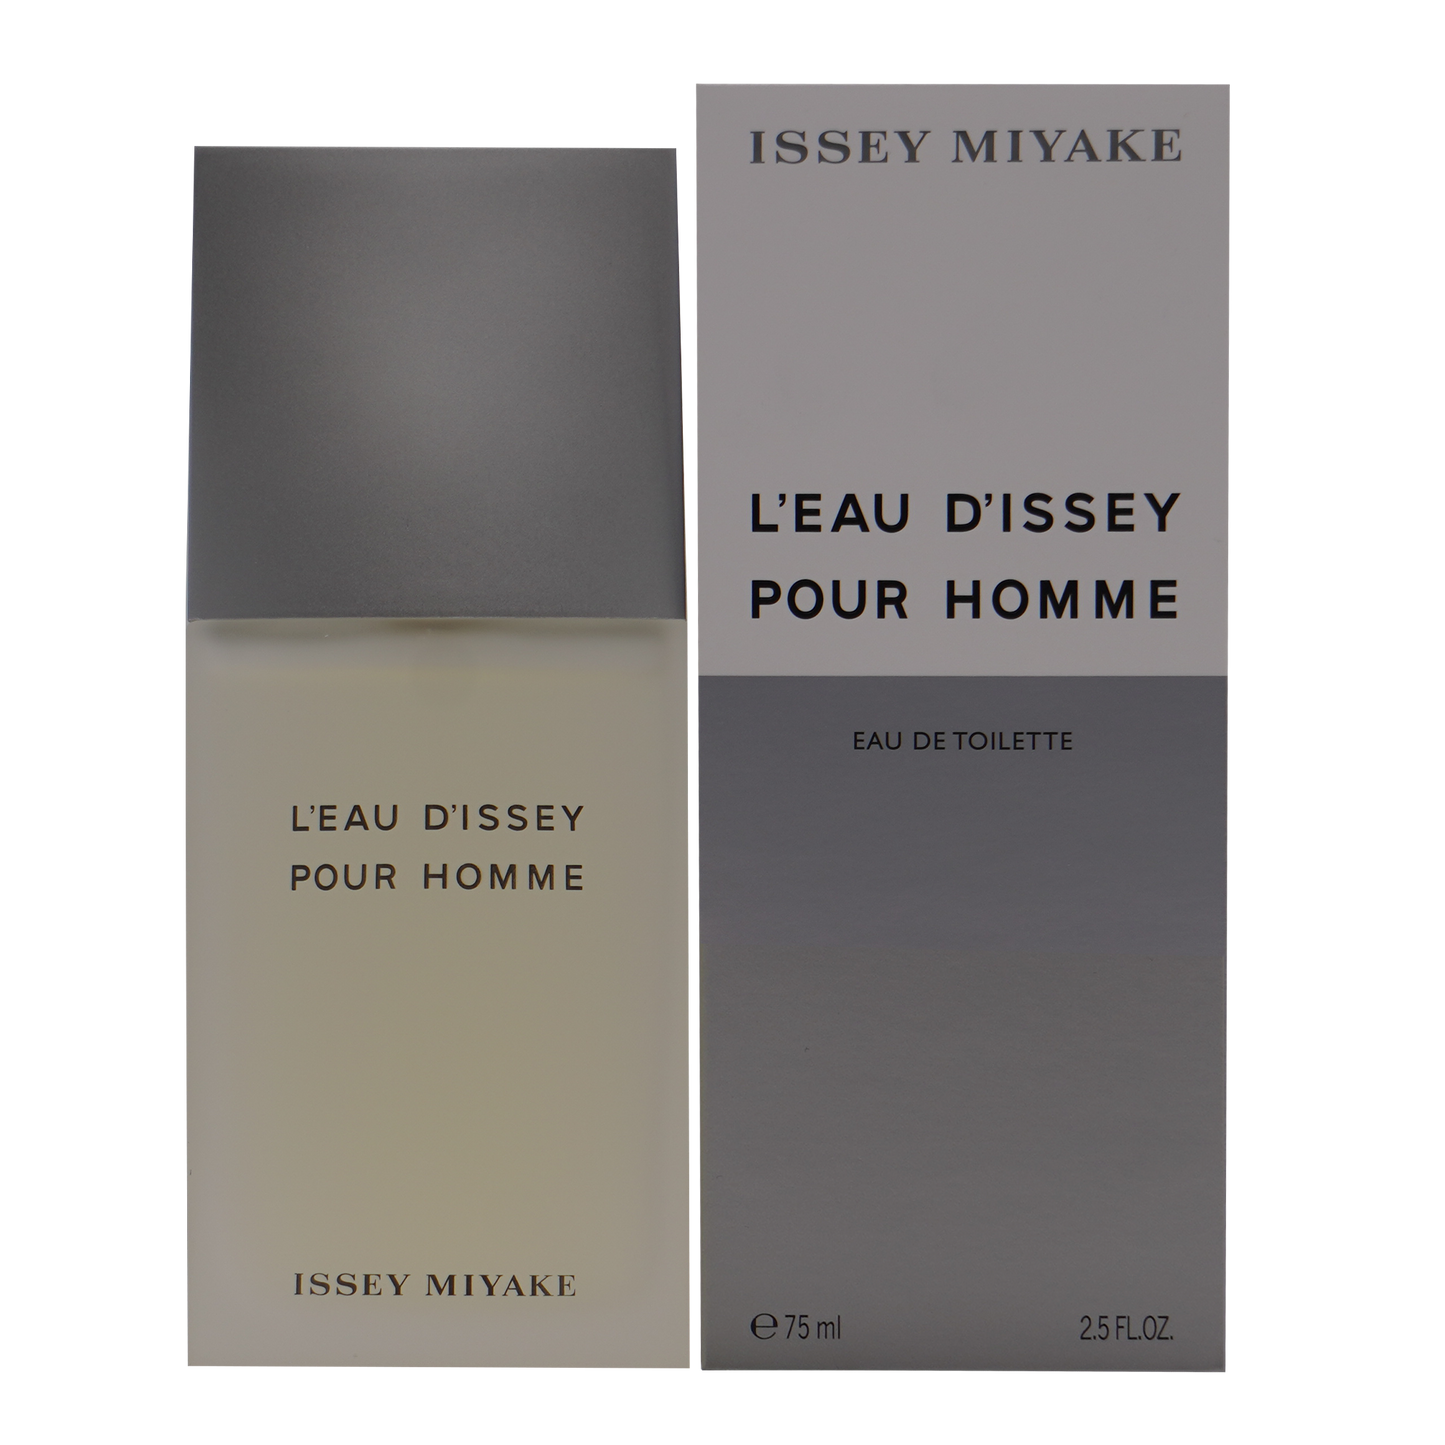  - Issey Miyake - 4.2 oz - Eau de Toilette - Fragrance - 3423470311365 - Fragrance